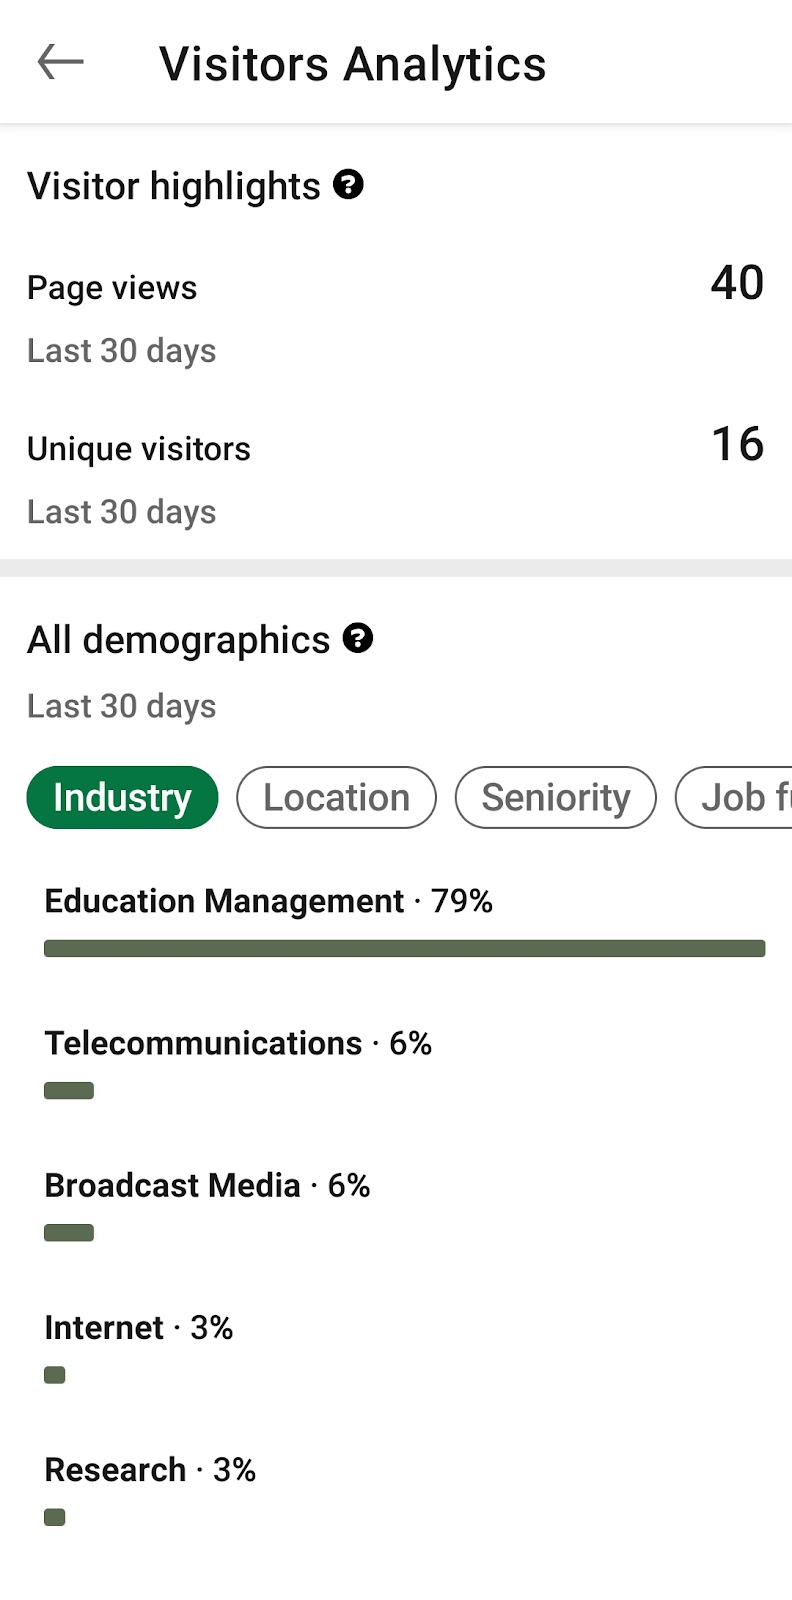 Visitor demographics